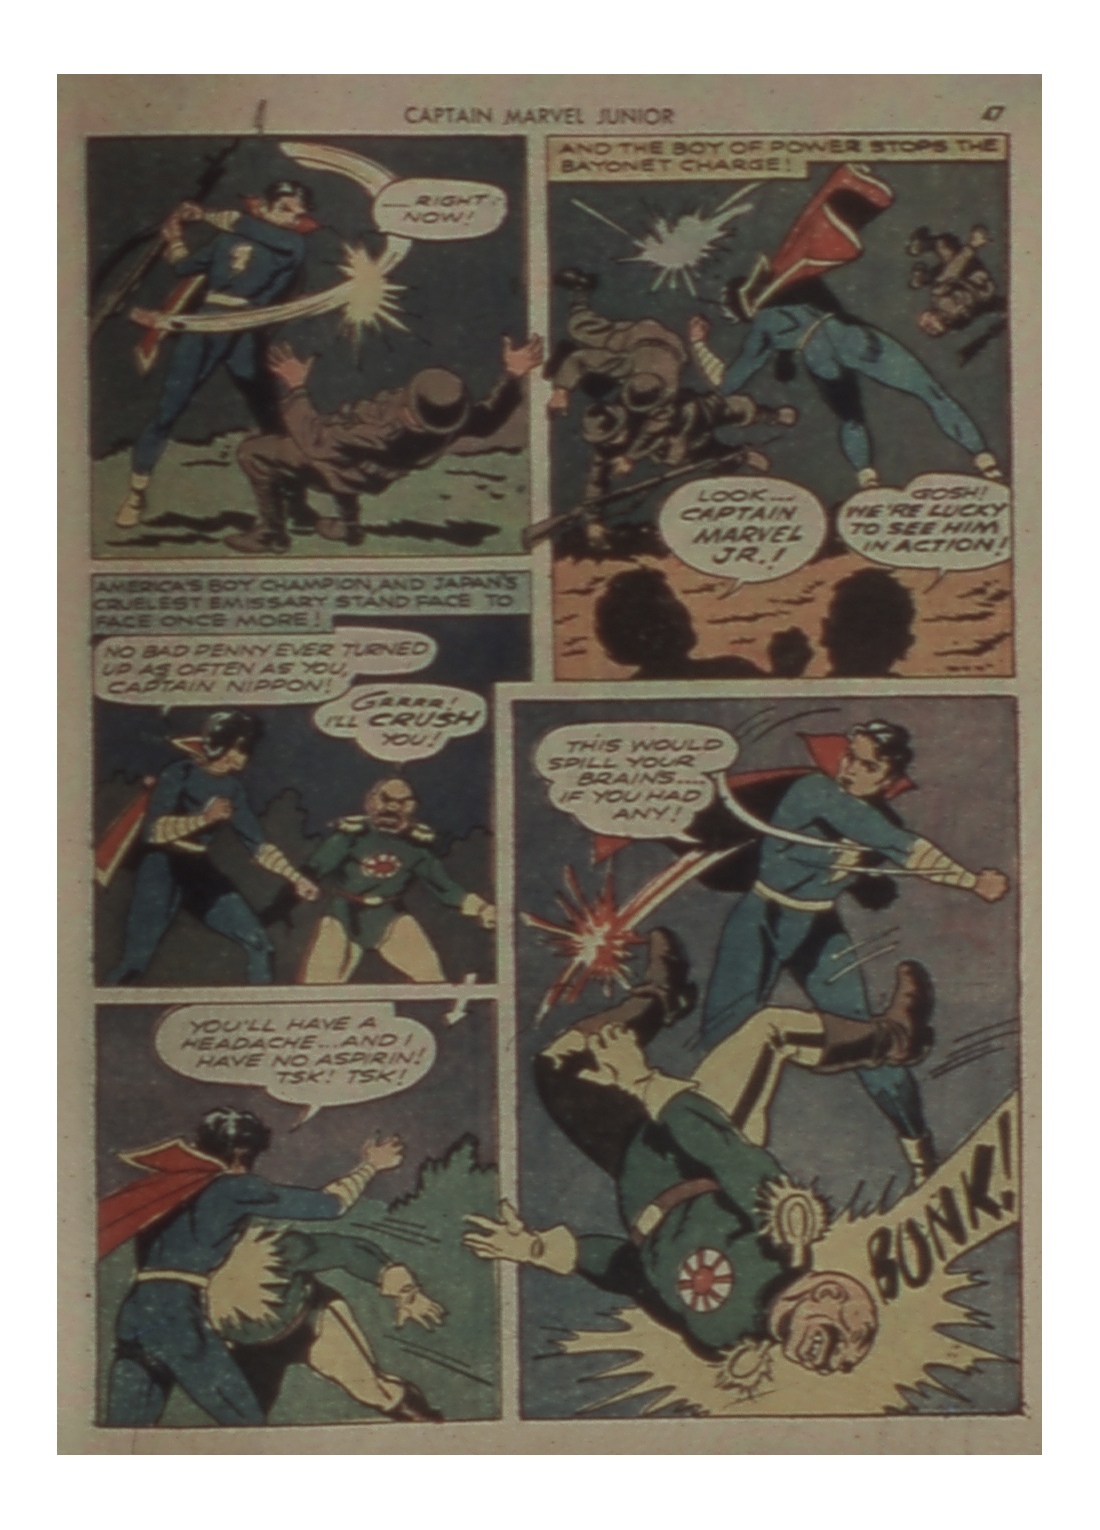 Read online Captain Marvel, Jr. comic -  Issue #4 - 48